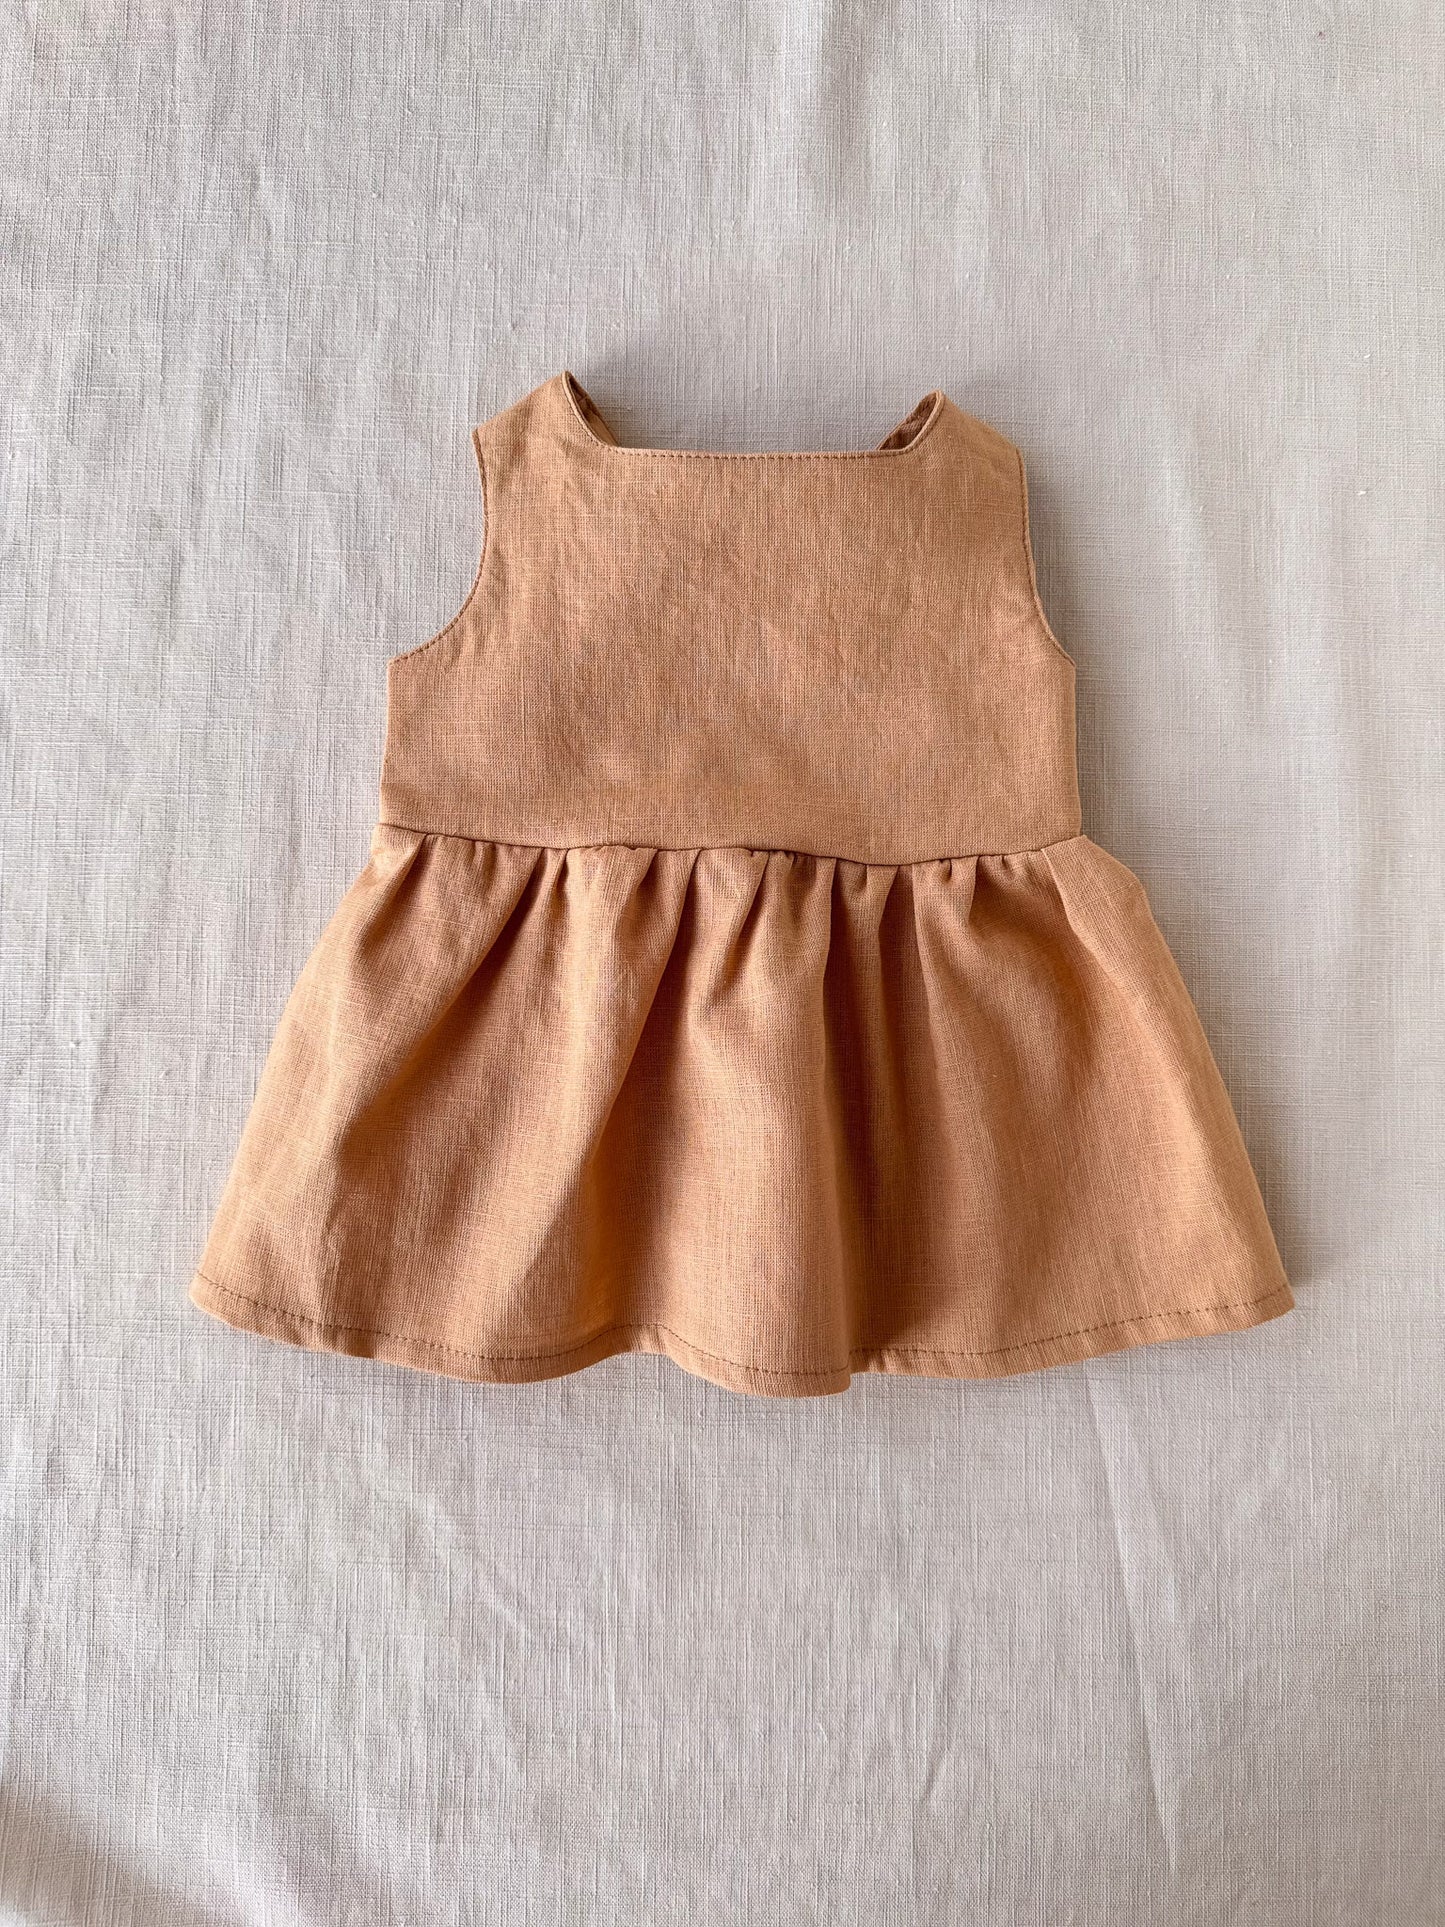 Arabella baby dress / linen - cinnamon